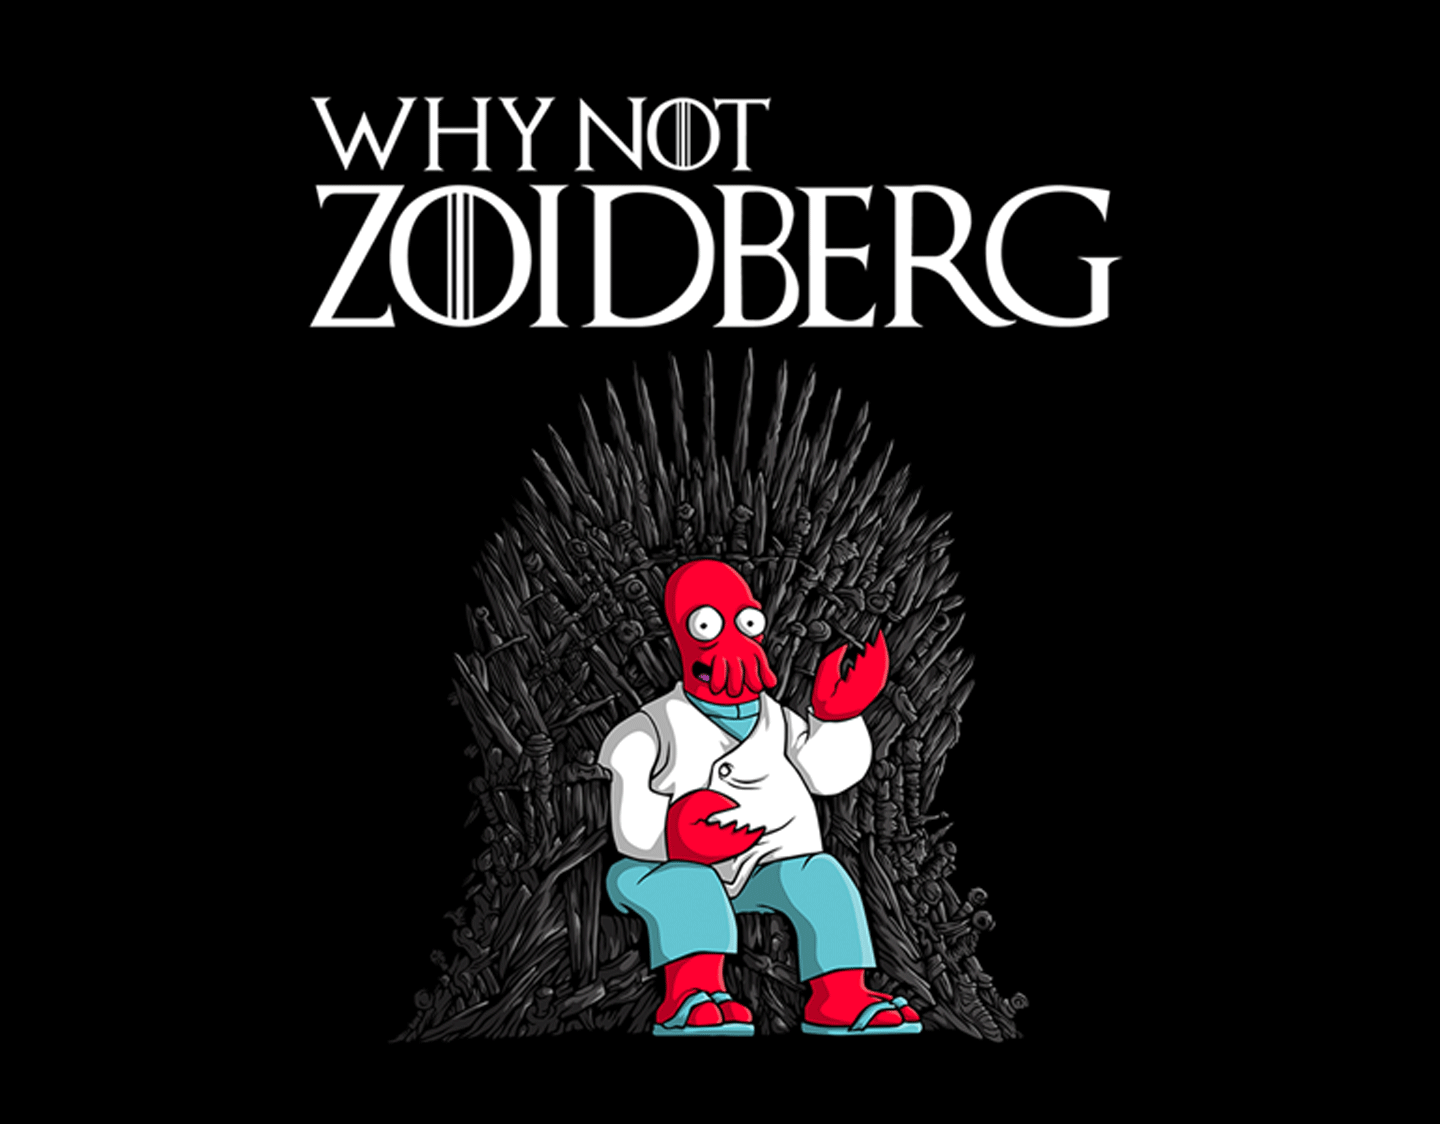 not zoidberg game of thrones